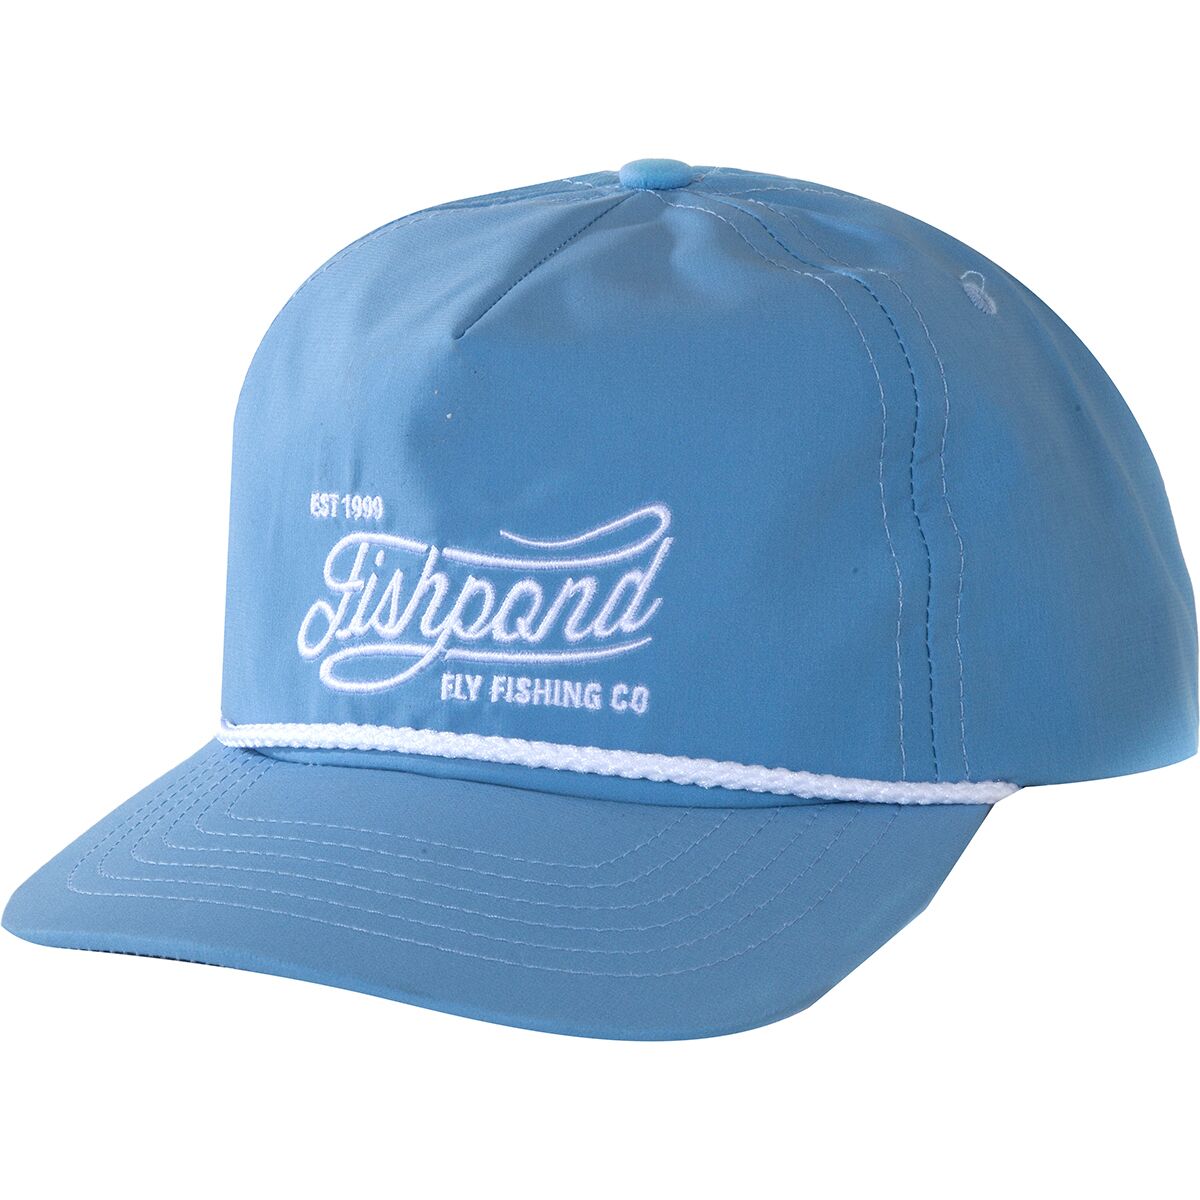 Fishpond Patrol Hat